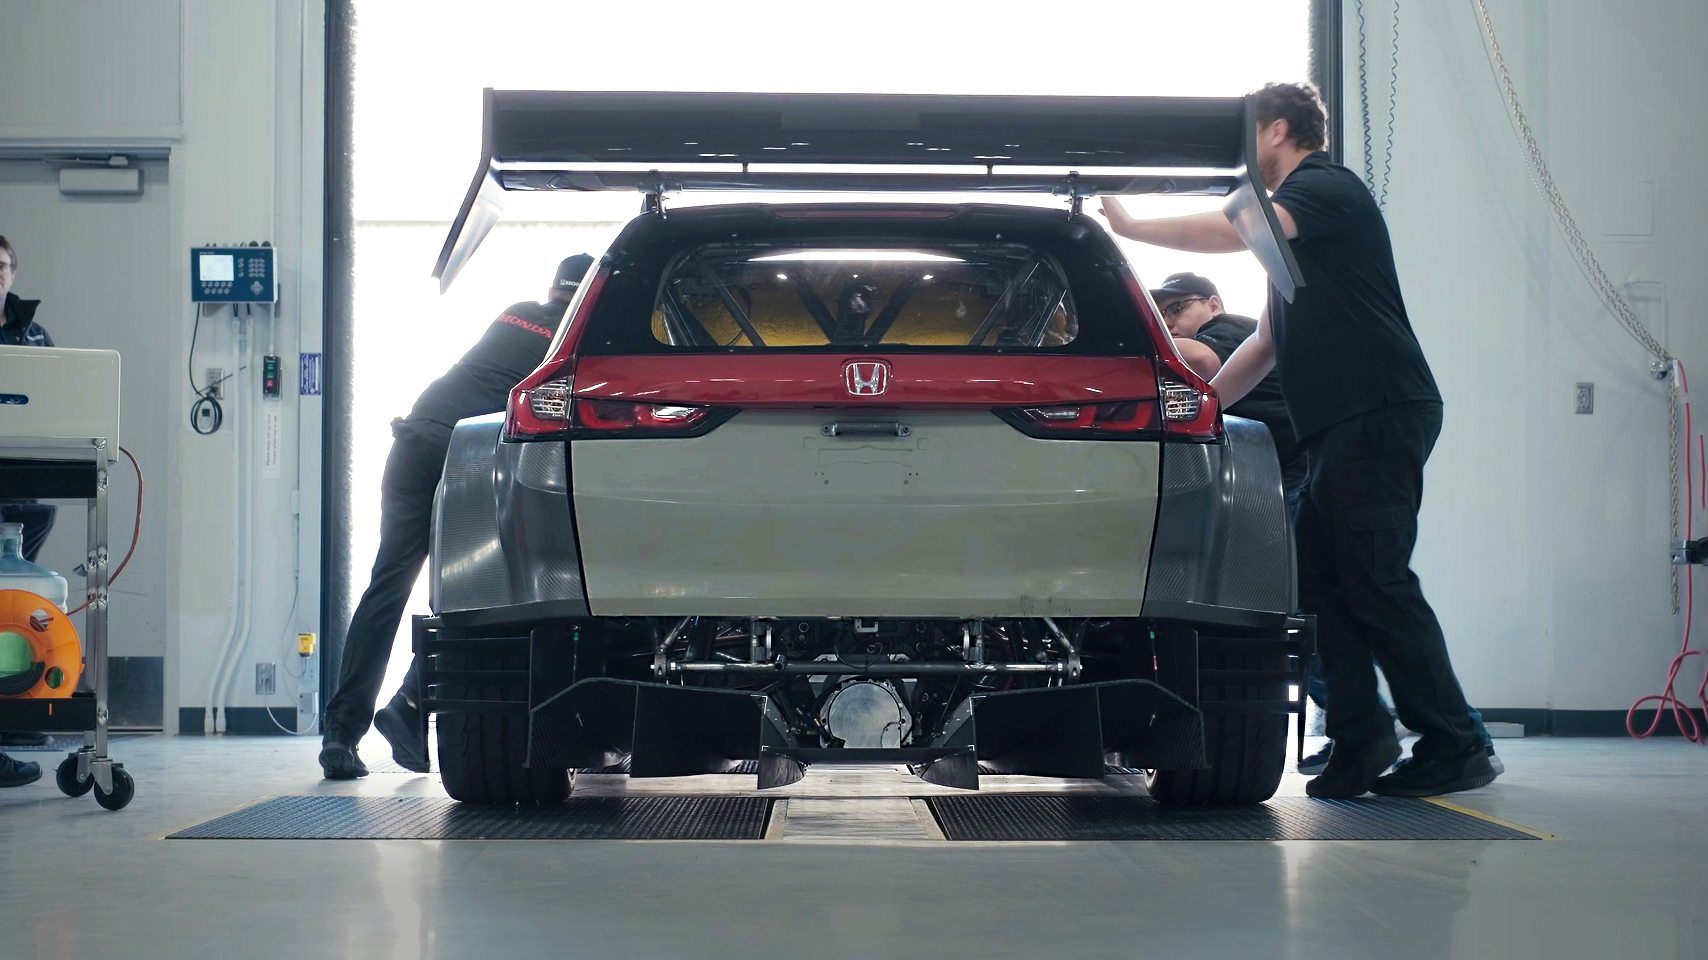 CR-V Hybrid Racer da Honda parece insano